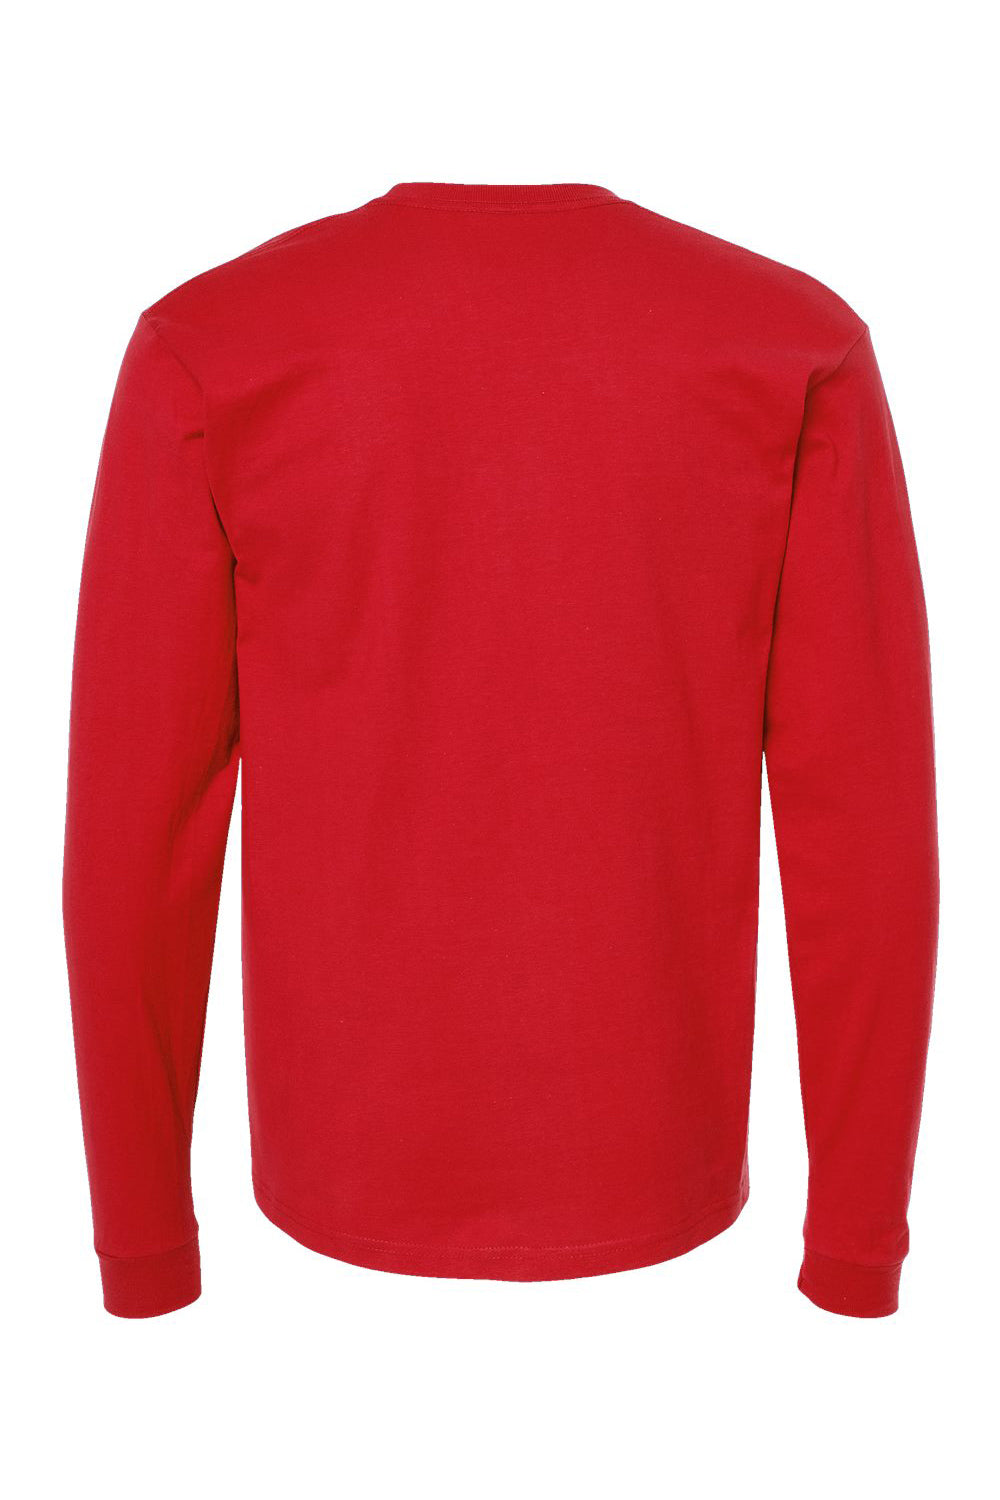 Tultex 291 Mens Jersey Long Sleeve Crewneck T-Shirt Red Flat Back